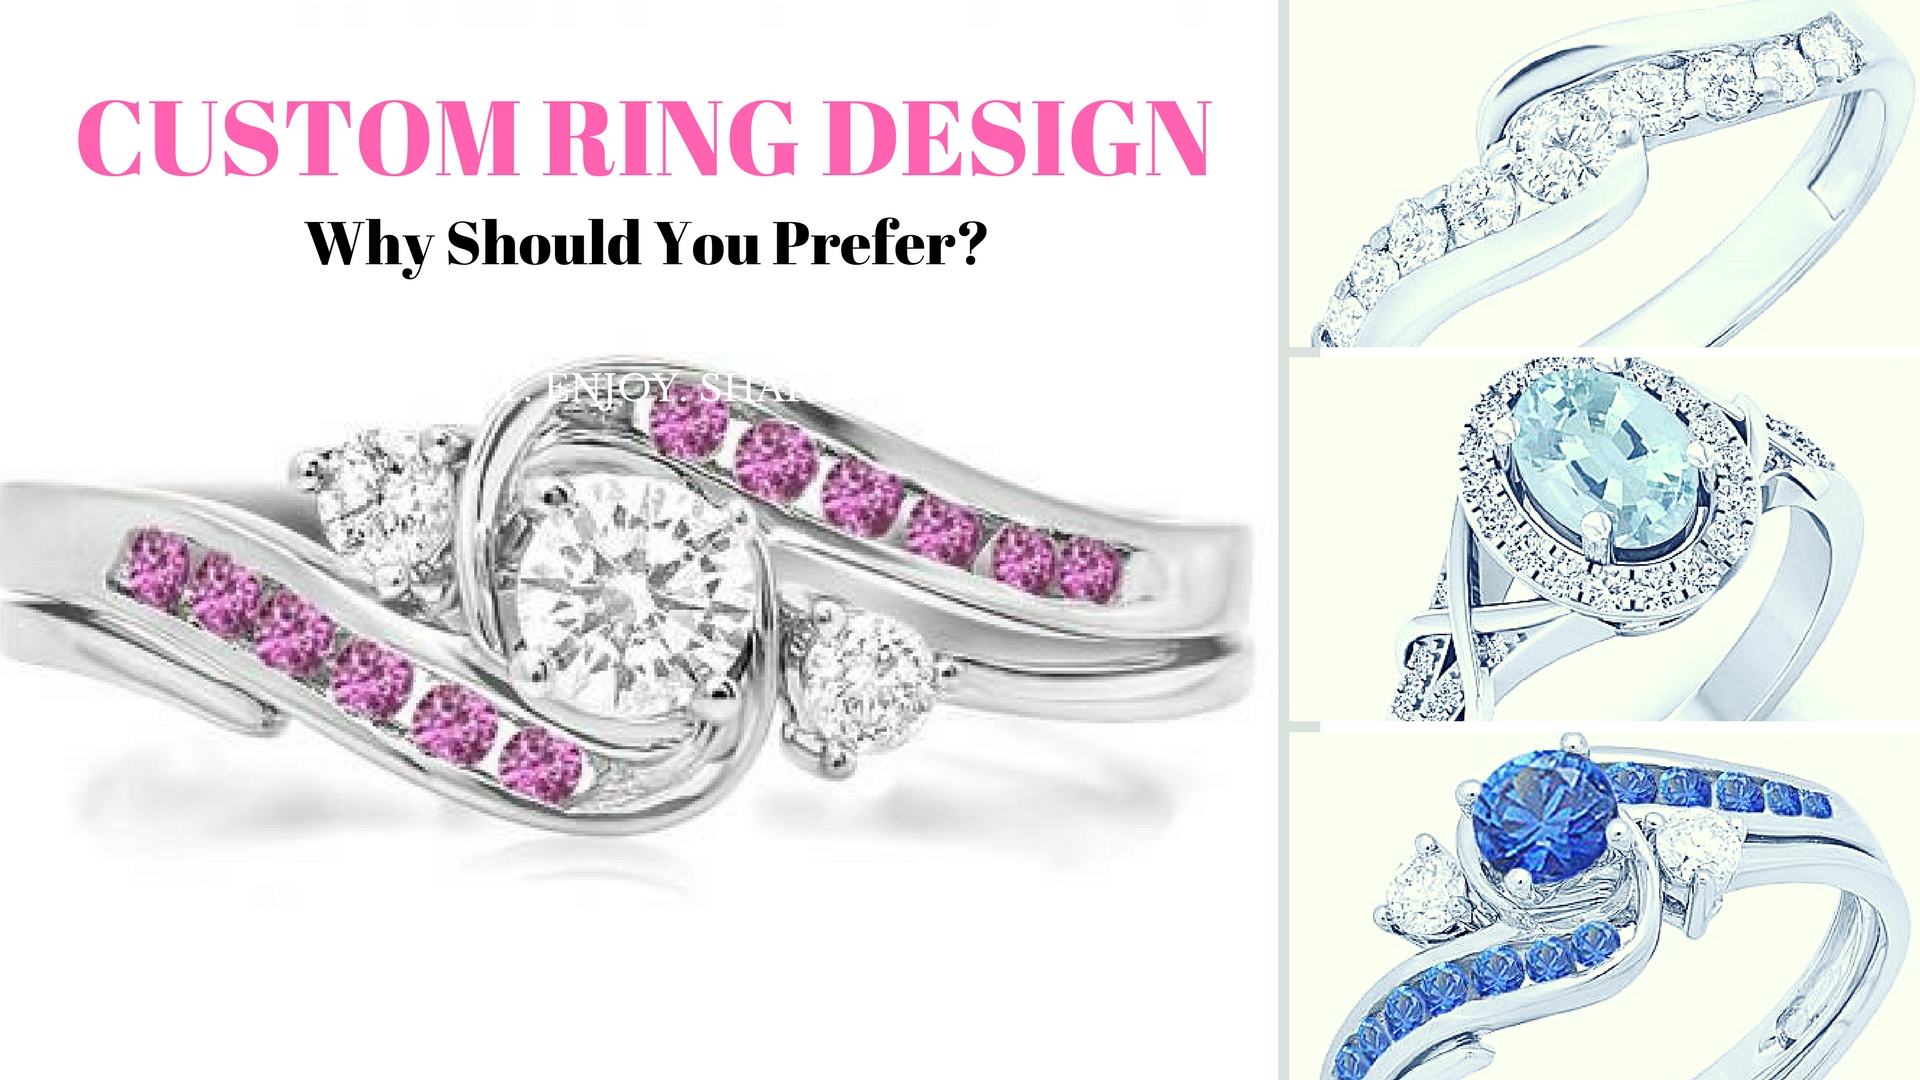 Why Should You Prefer Custom Ring Design - Dazzling Rock